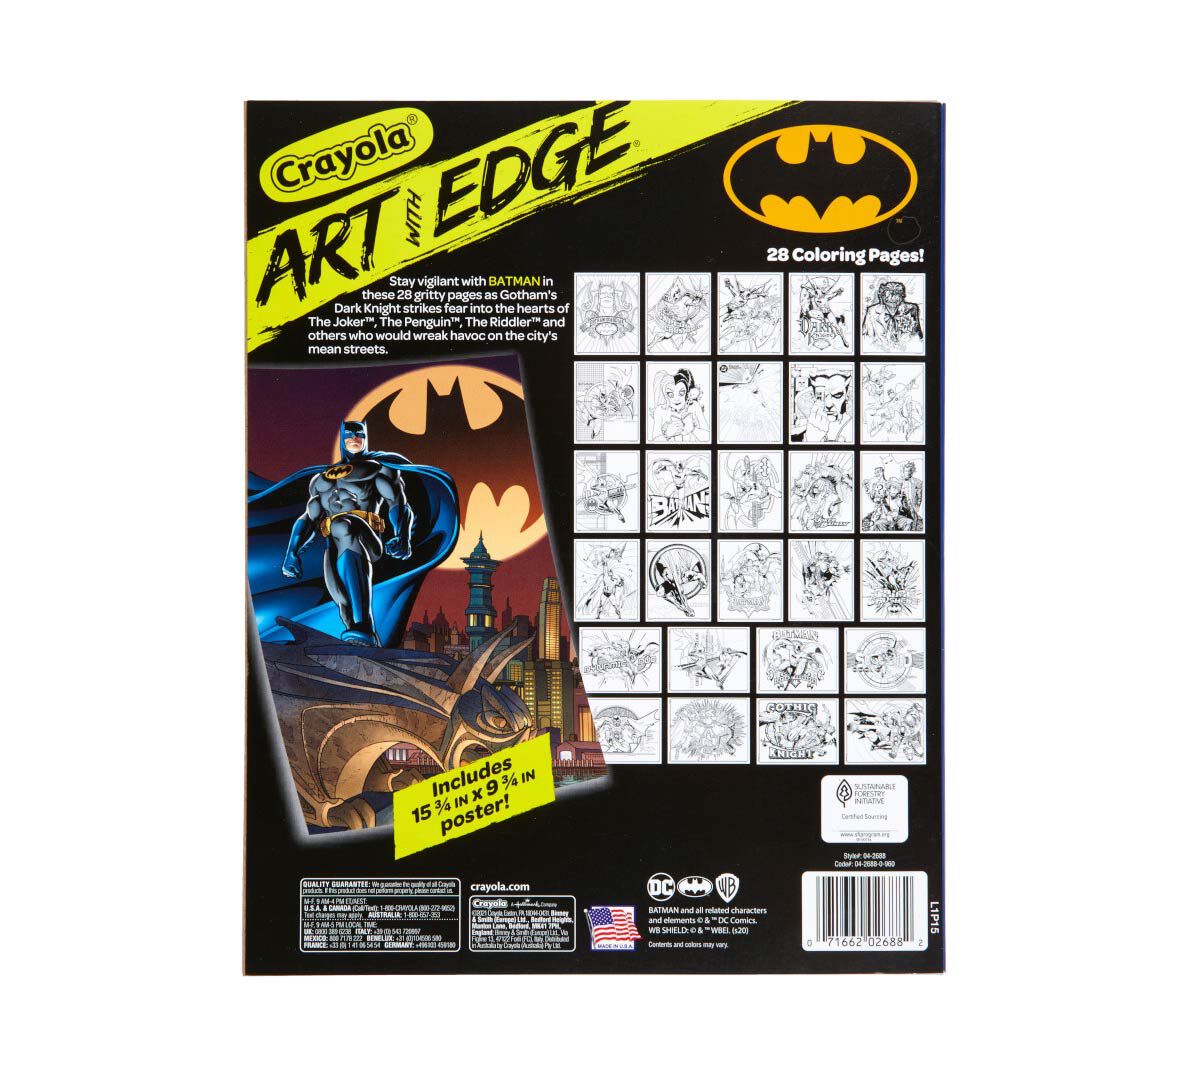 Crayola "Art with Edge" BATMAN Coloring Book for Kids & AdultsDC Comics 